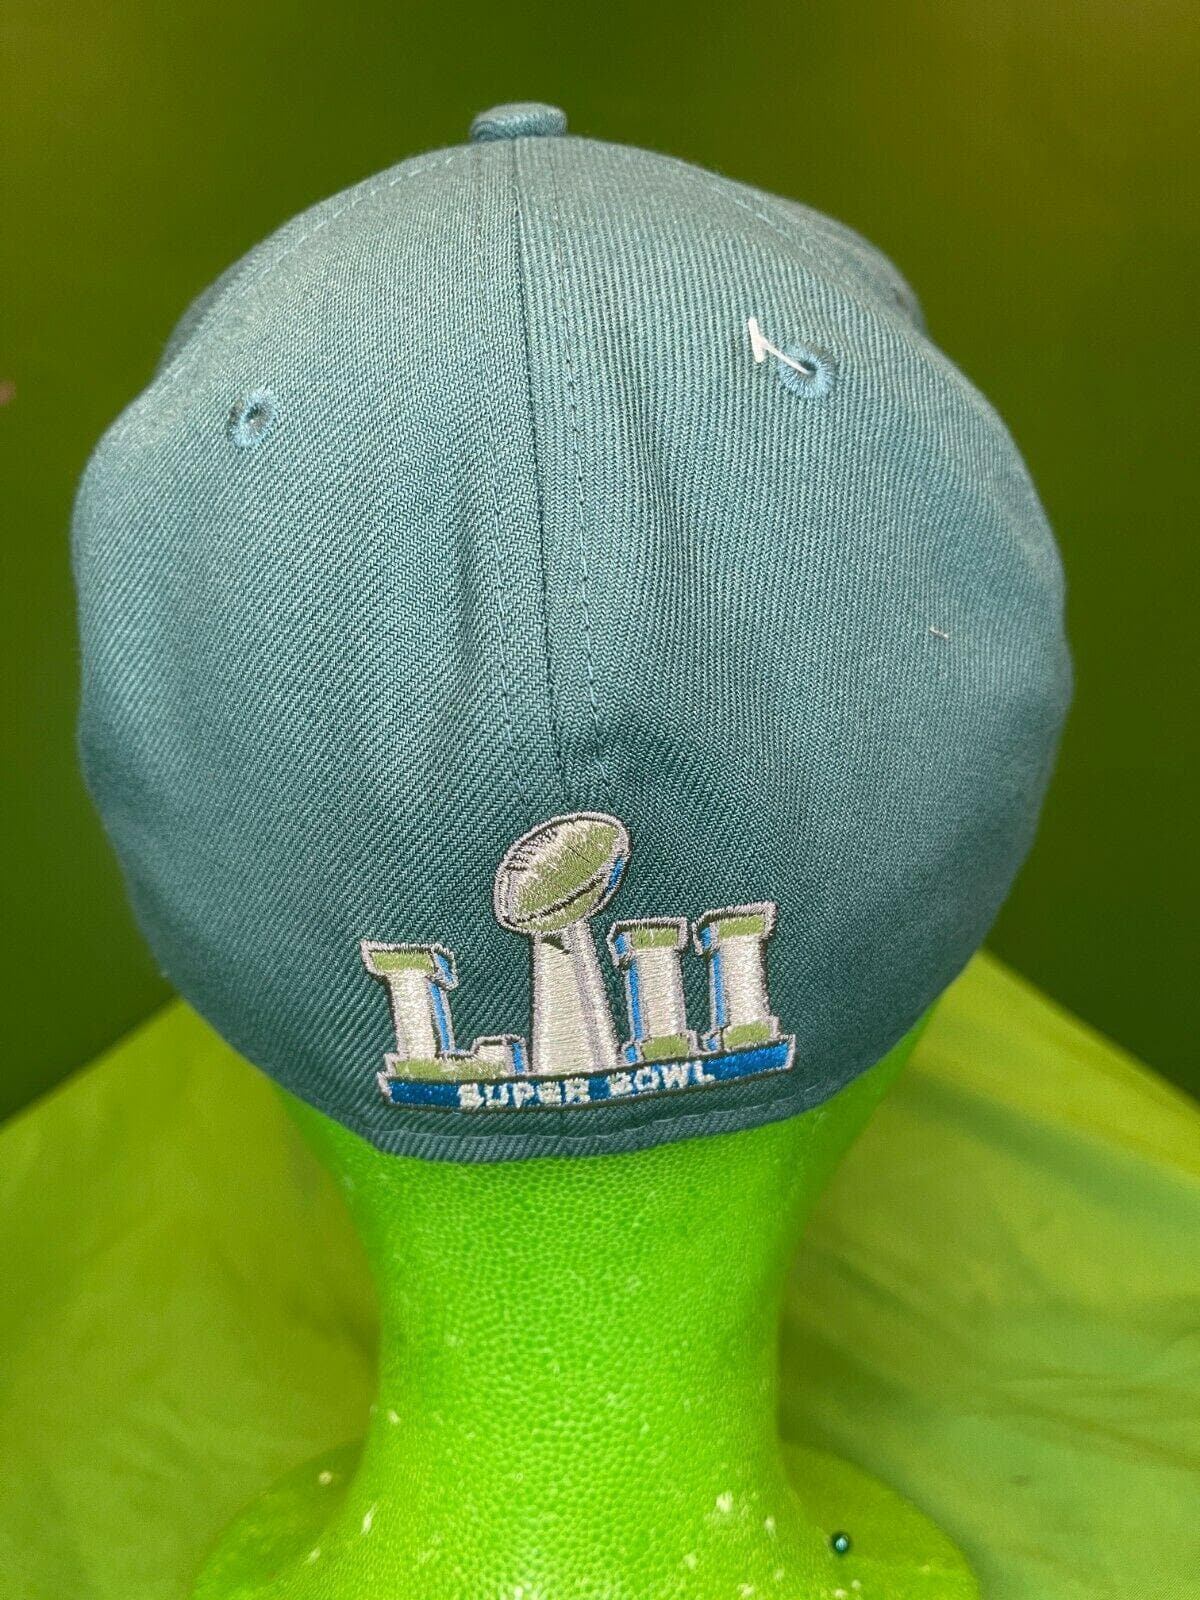 NFL Philadelphia Eagles Super Bowl LII Champs New Era 59FIFTY Cap/Hat Size 7 NWT